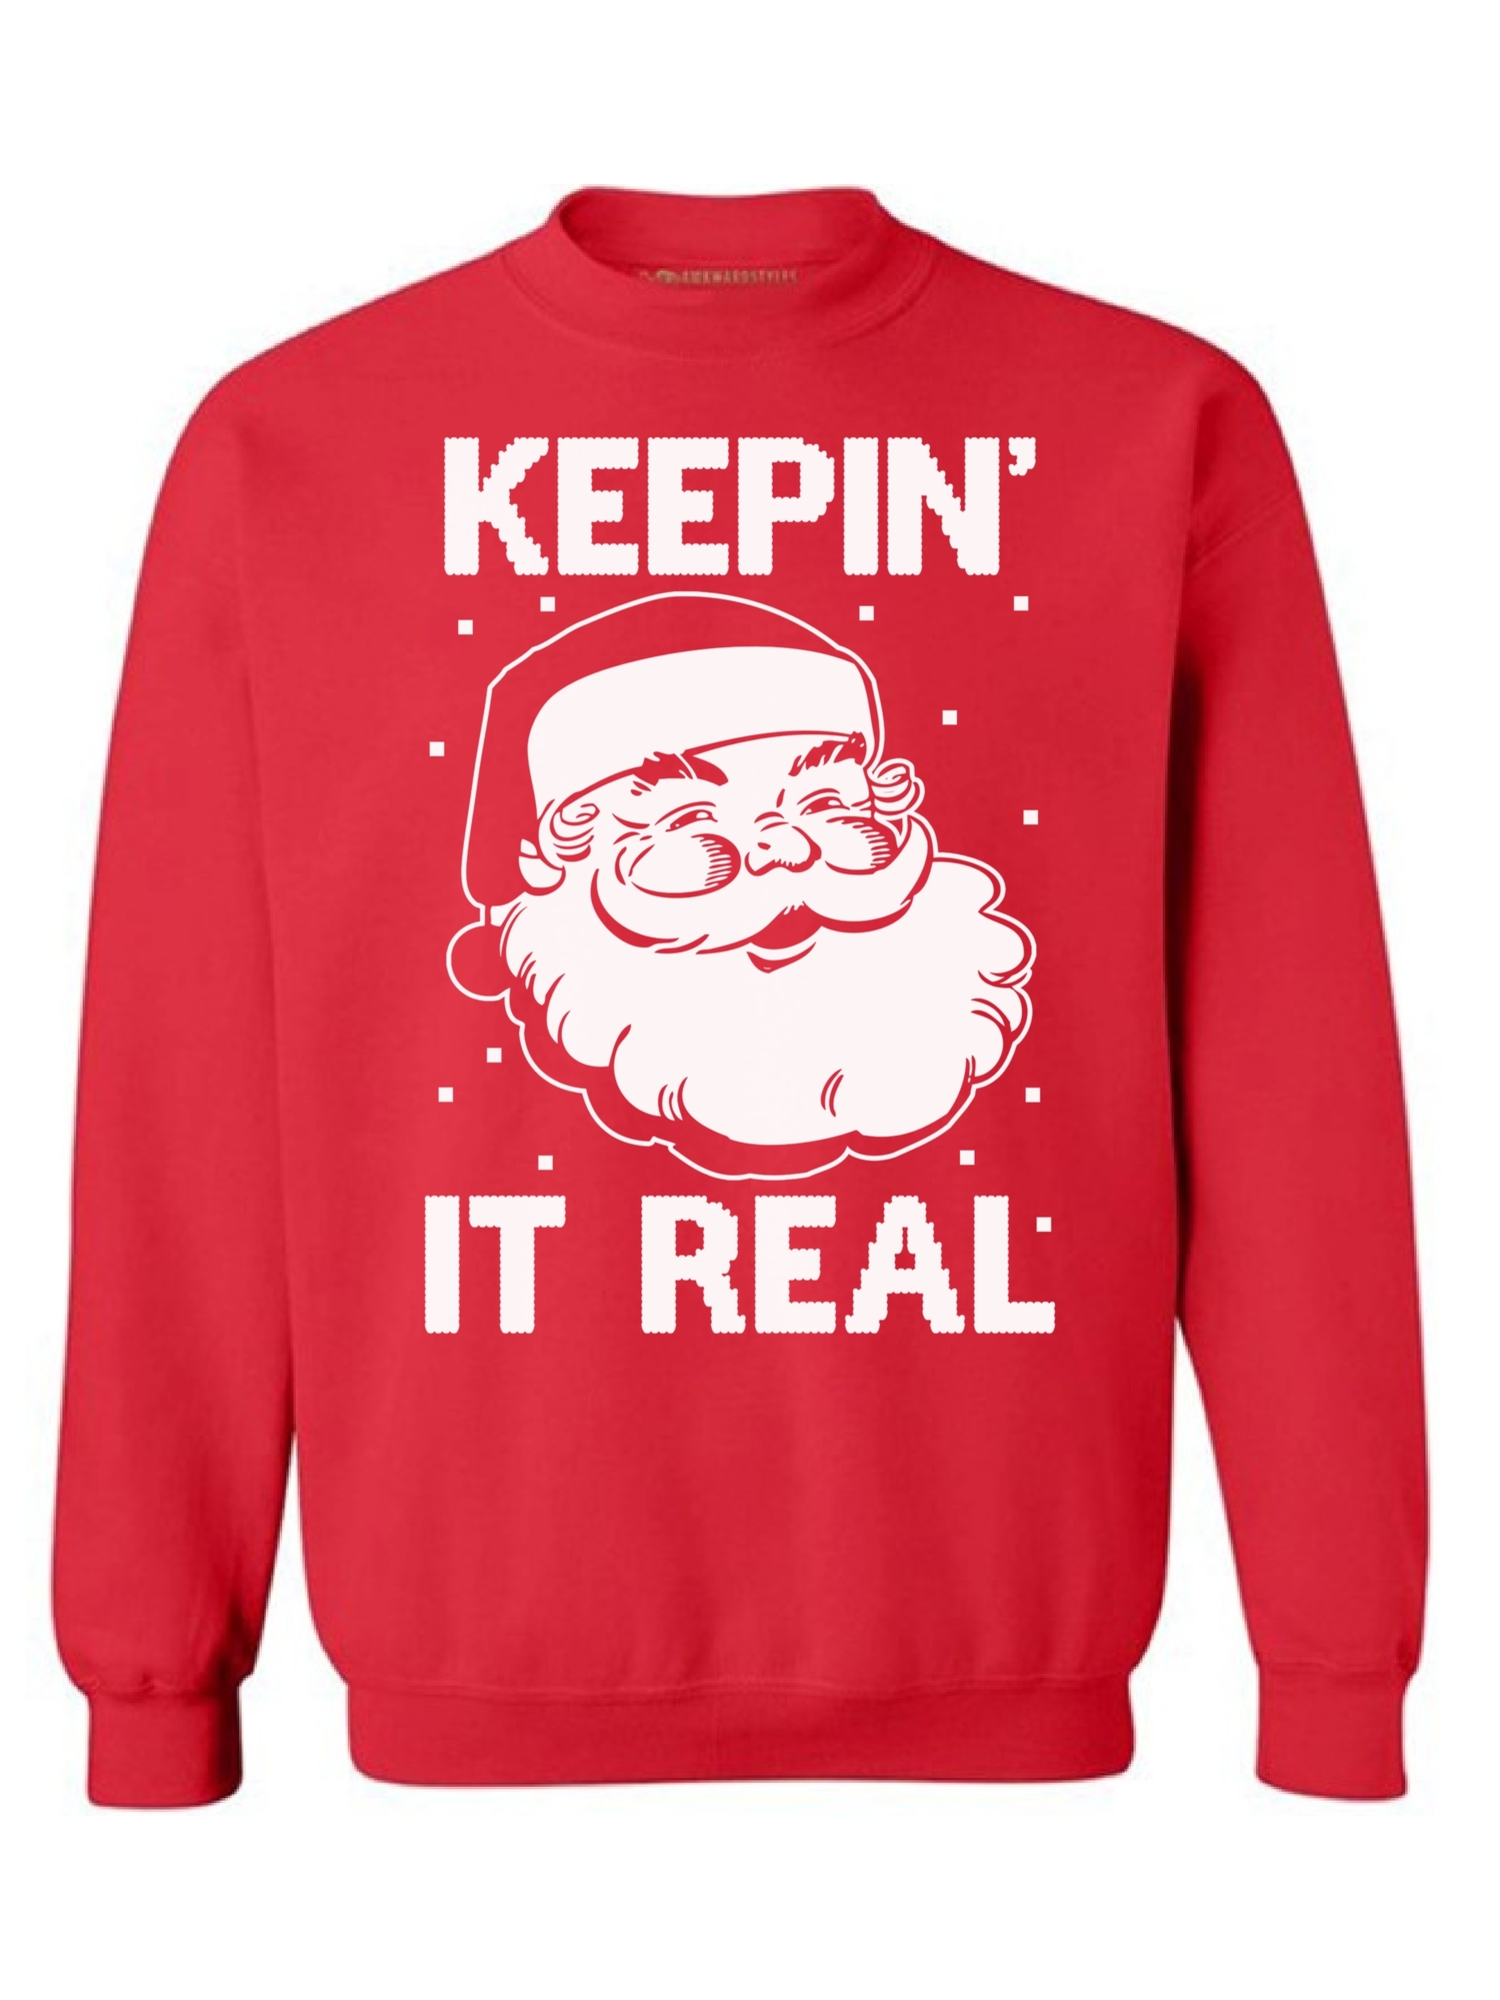 Ugly Christmas Sweatshirt Keepin' It Real Ugly Christmas Sweater Santa sweatshirt Santa sweater Santa Claus Ugly Christmas Sweatshirt Xmas Gifts Holiday Sweaters for men womens Christmas Sweatshirts - image 1 of 5